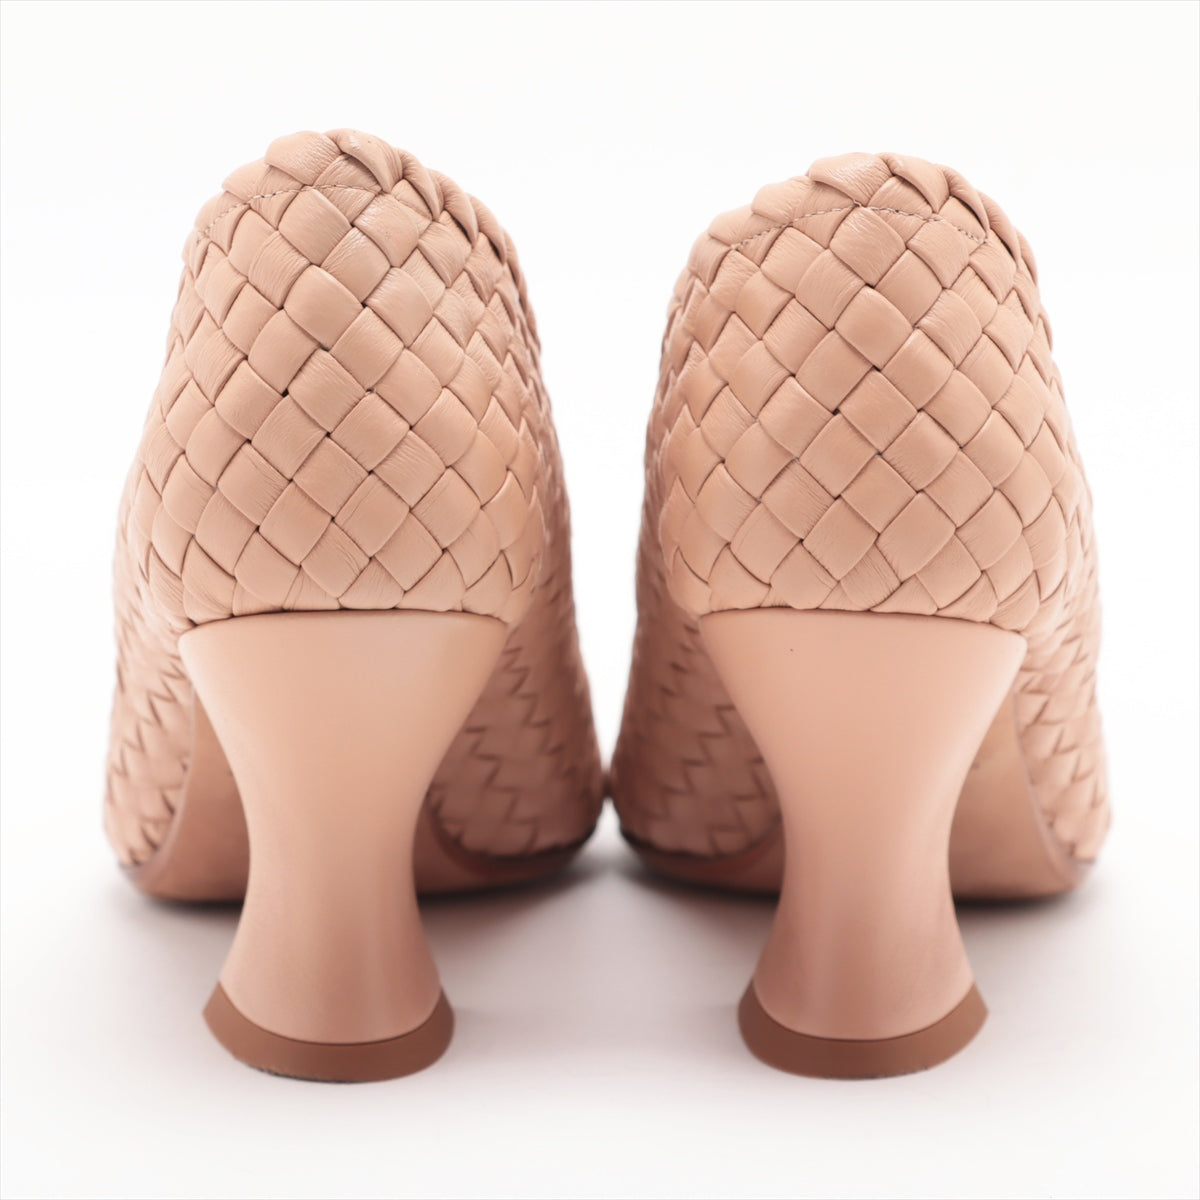 Bottega Veneta 皮革高跟鞋 35 1/2 米色 608850 Armond Interchart